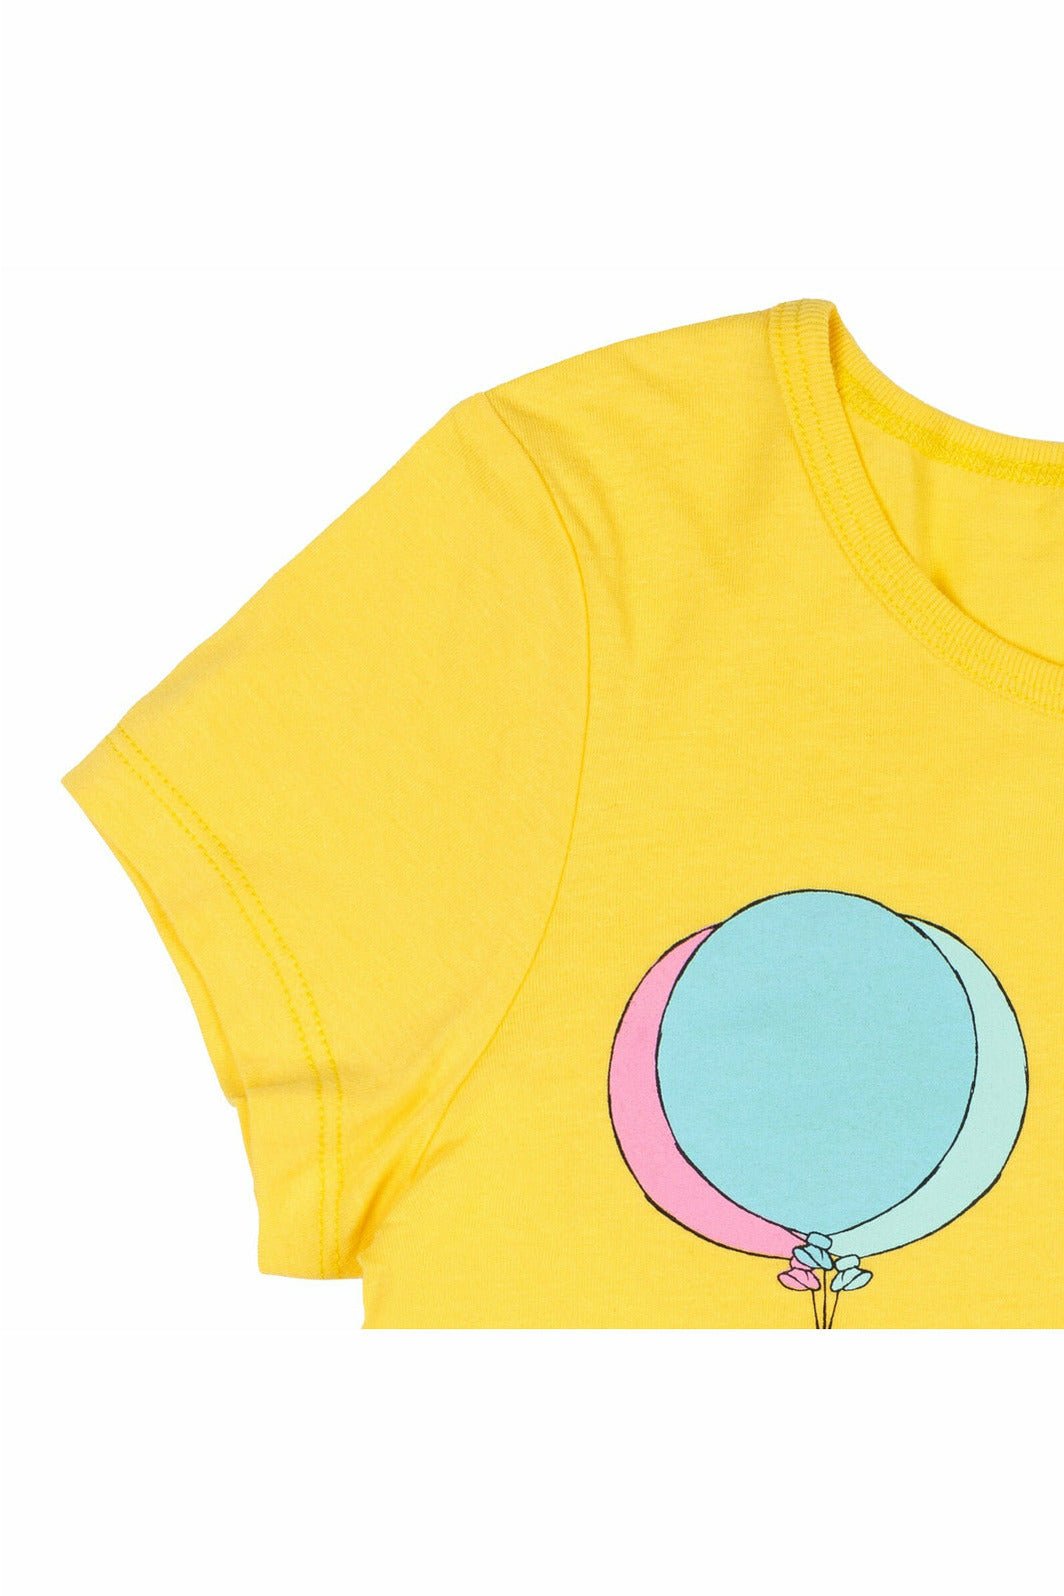 Winnie the Pooh Graphic T-Shirt - imagikids